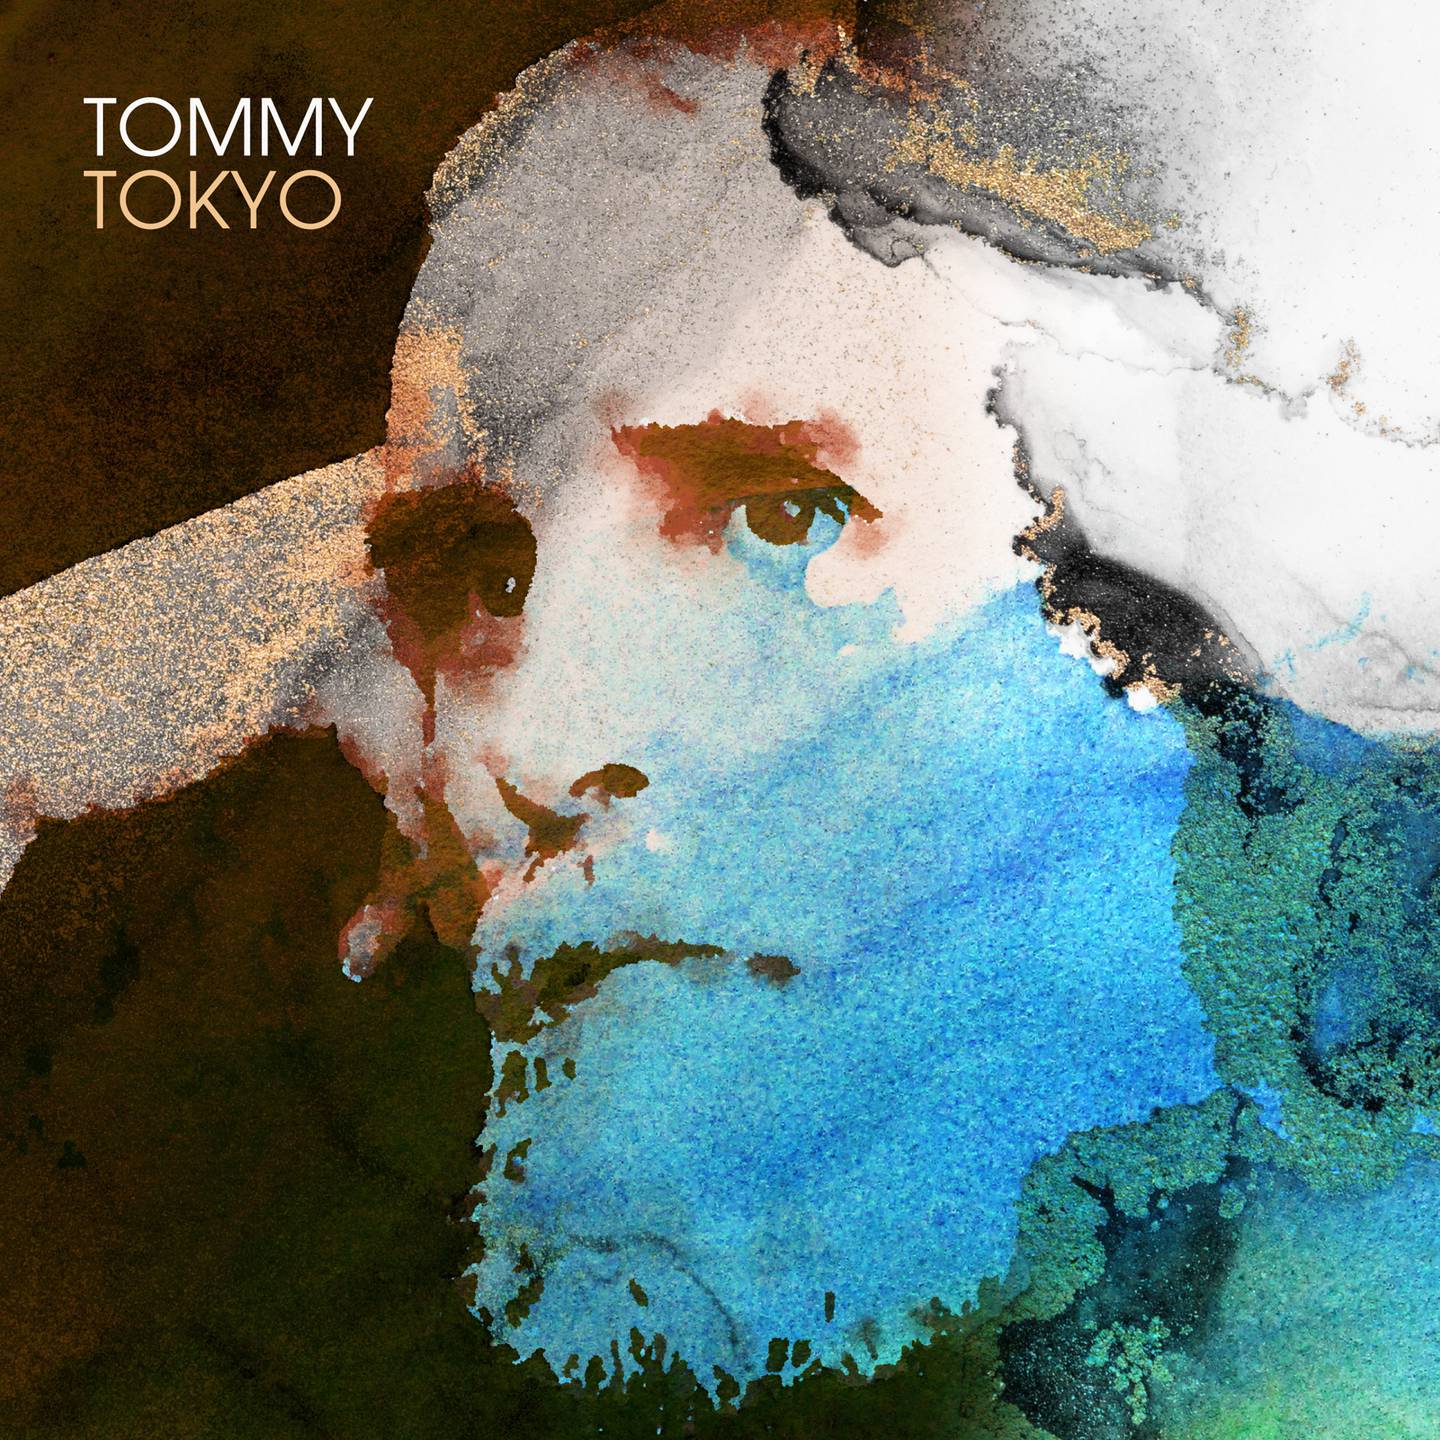 Tommy Tokyo: "Tommy Tokyo"